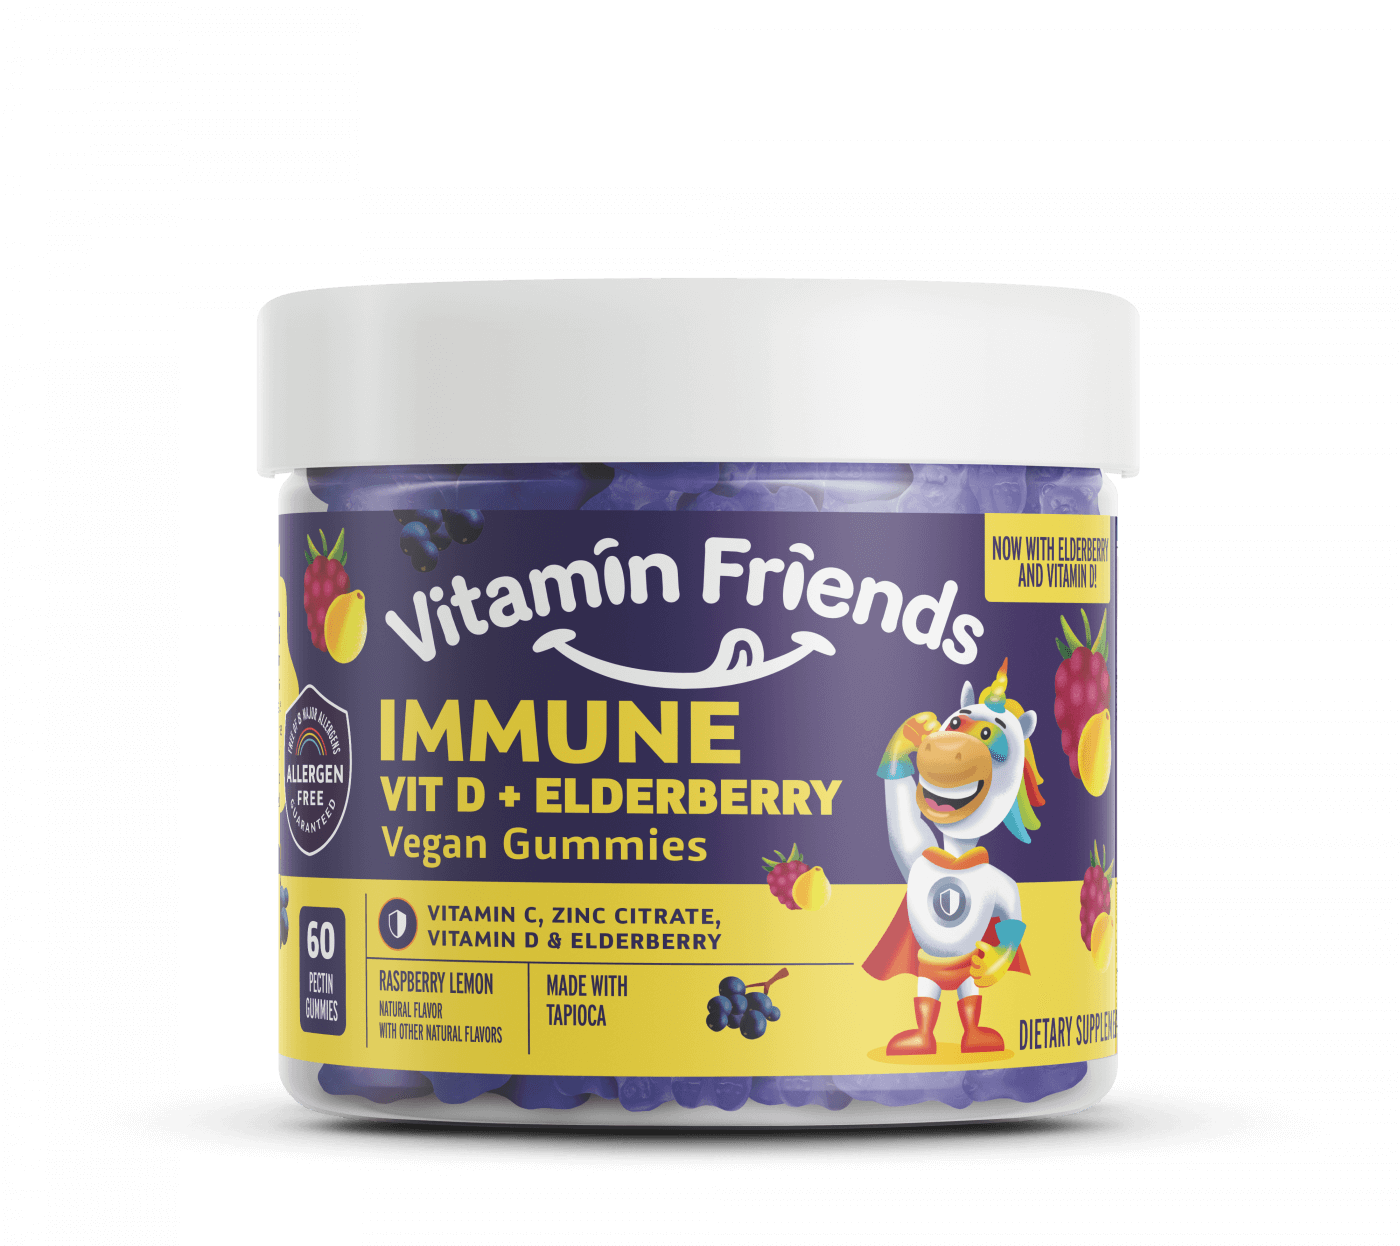 Vitamin Friends Vitamin D and Elderberry gummies